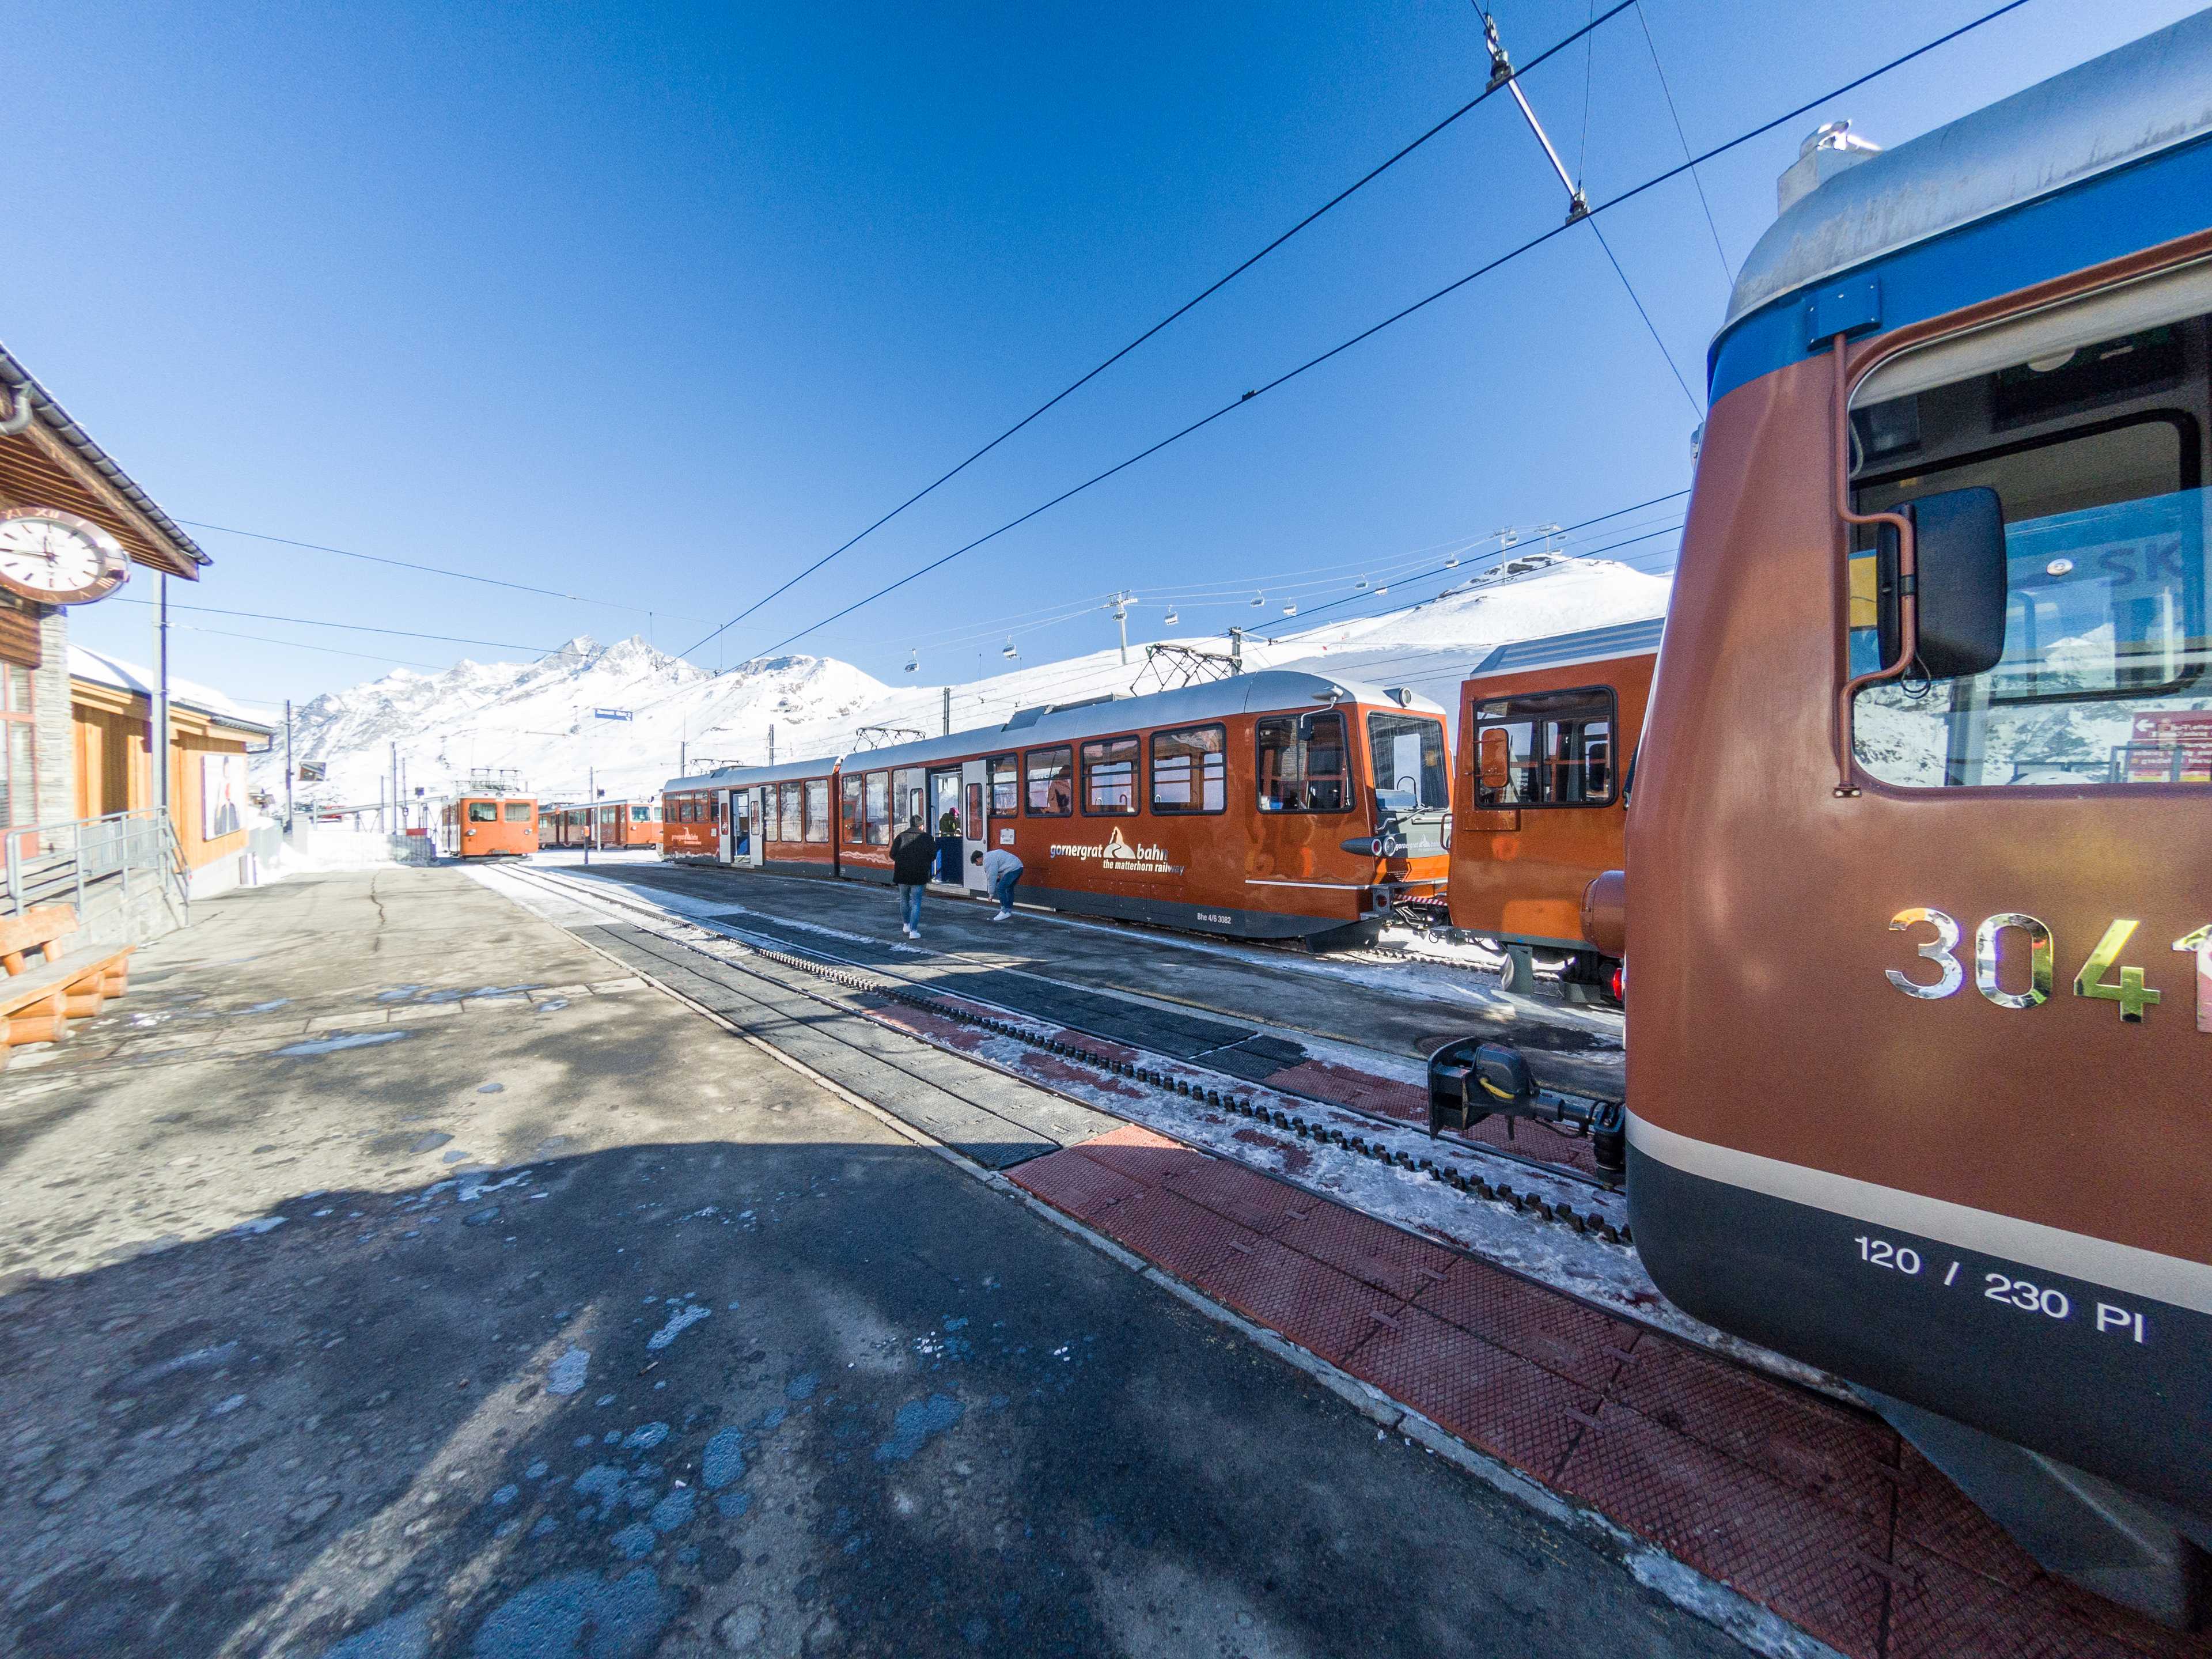 Gornergratbahn railway station, Riffelberg (2852 m a.s.l.), Zermatt